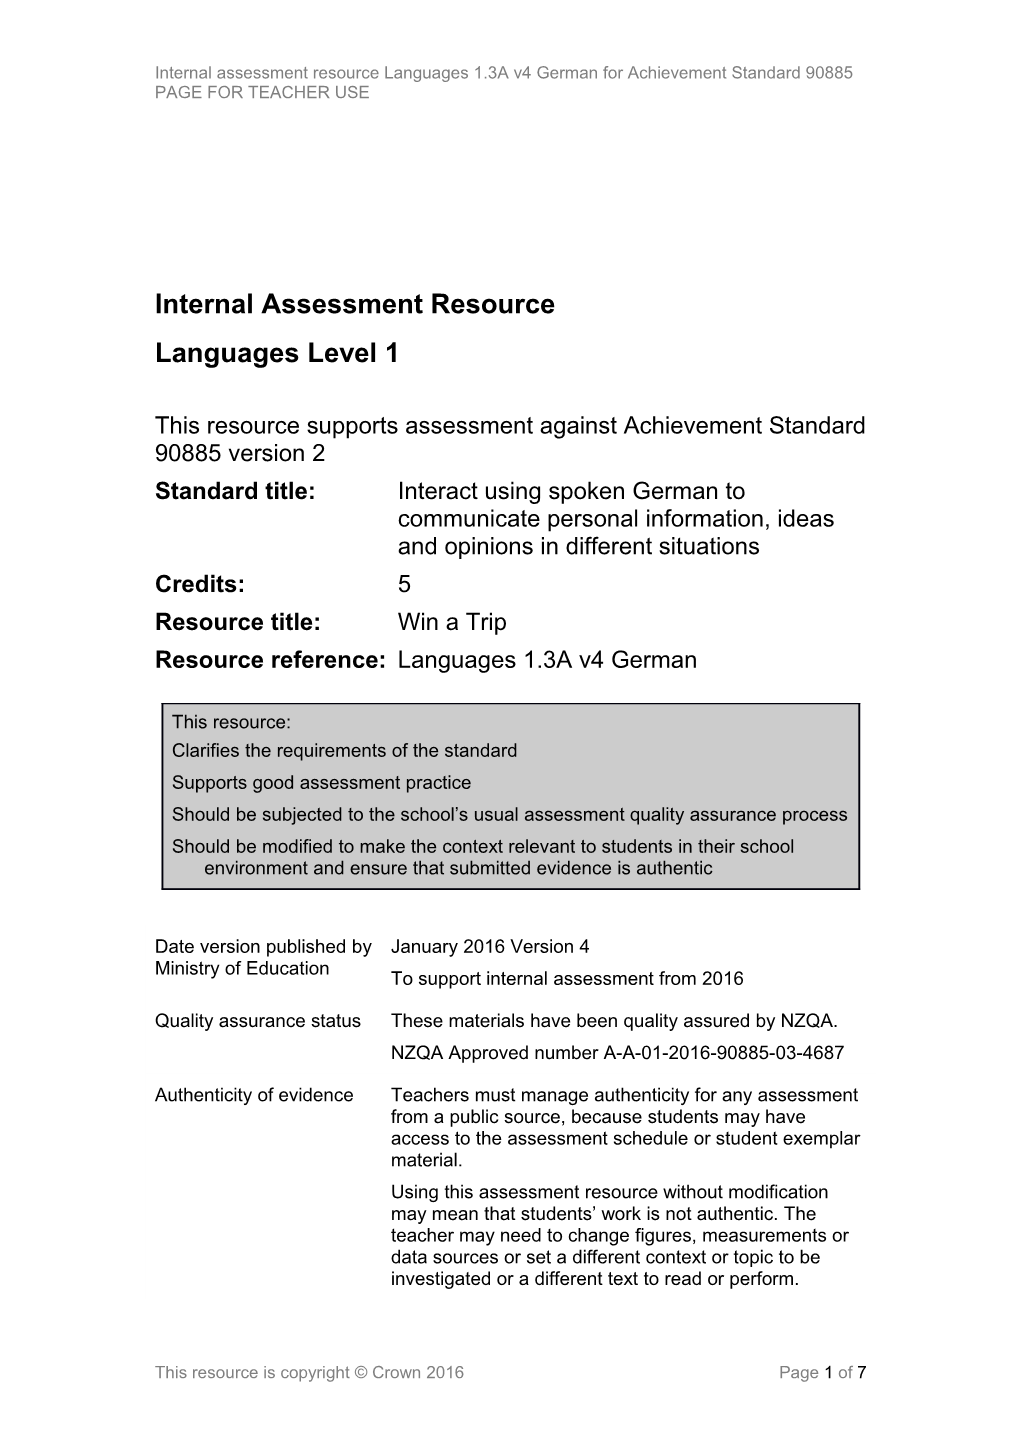 Level 1 Languages Internal Assessment Resource